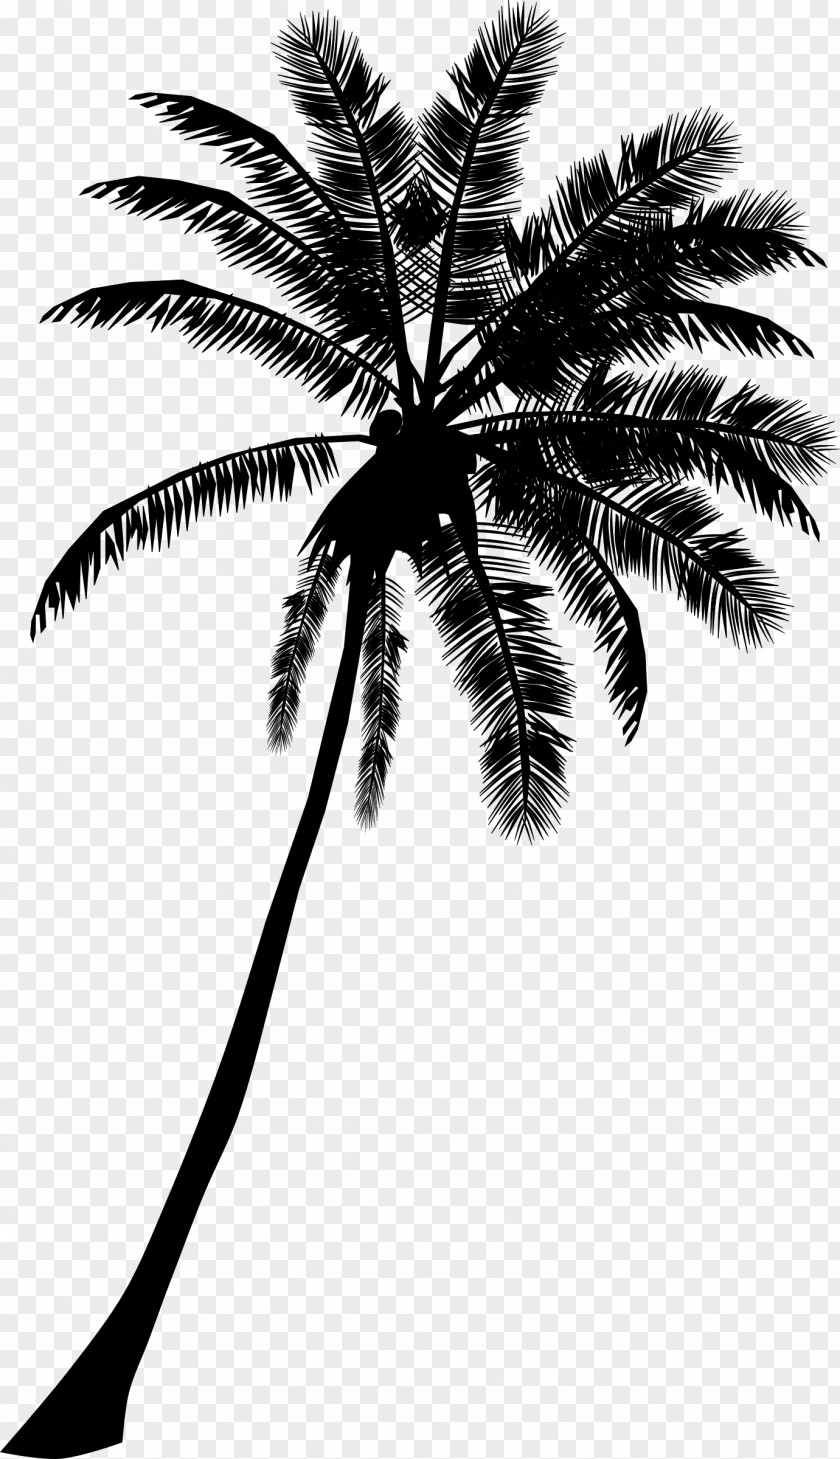 Coconut Tree Arecaceae Cdr Silhouette Clip Art PNG